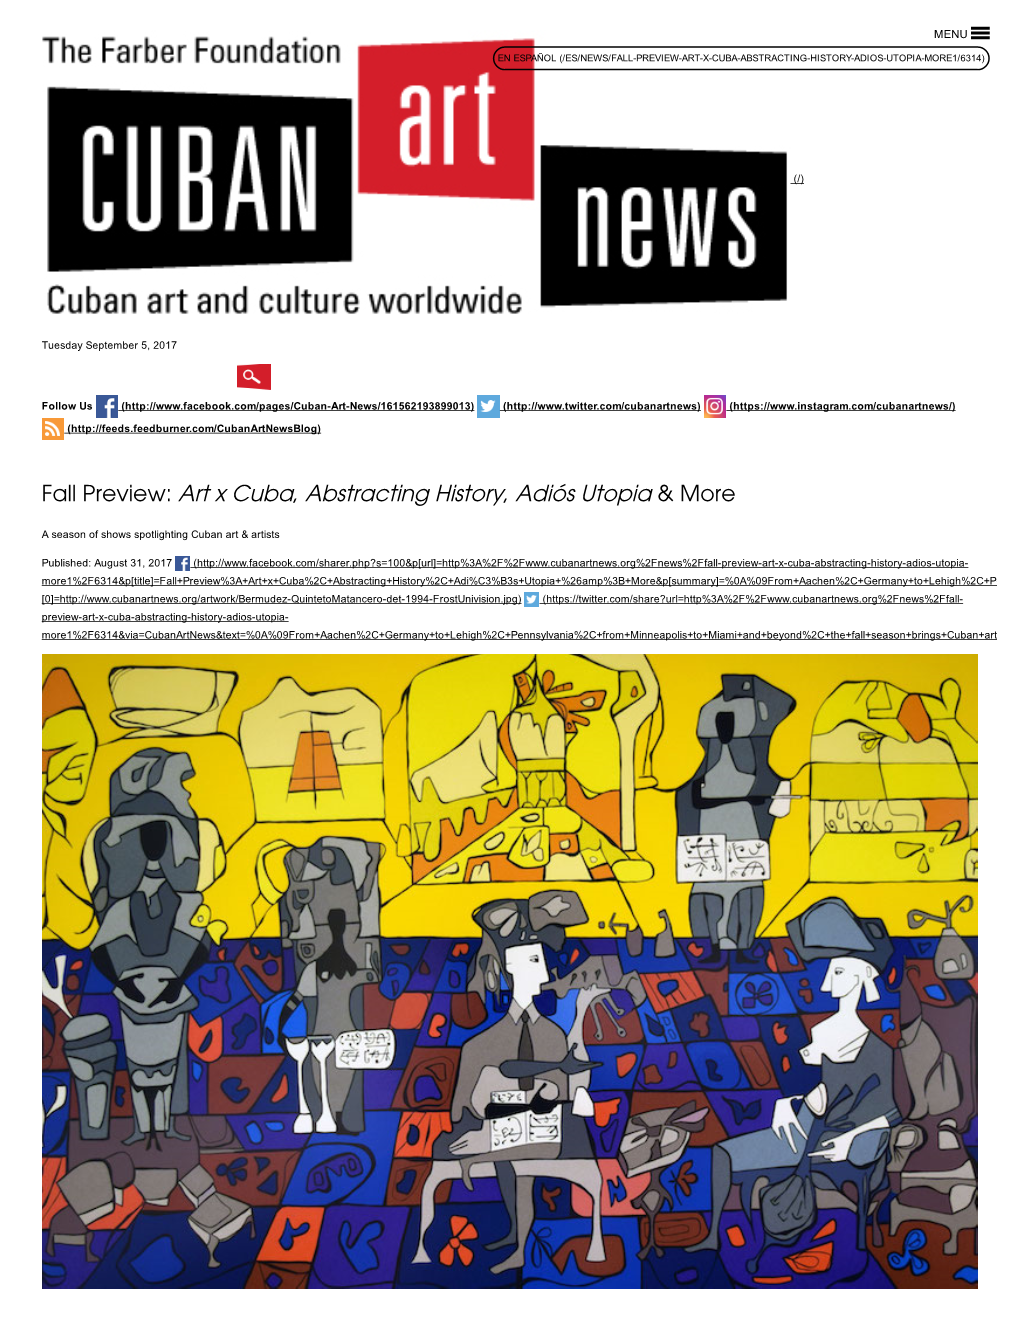 Fall Preview: Art X Cuba, Abstracting History, Adiós Utopia & More